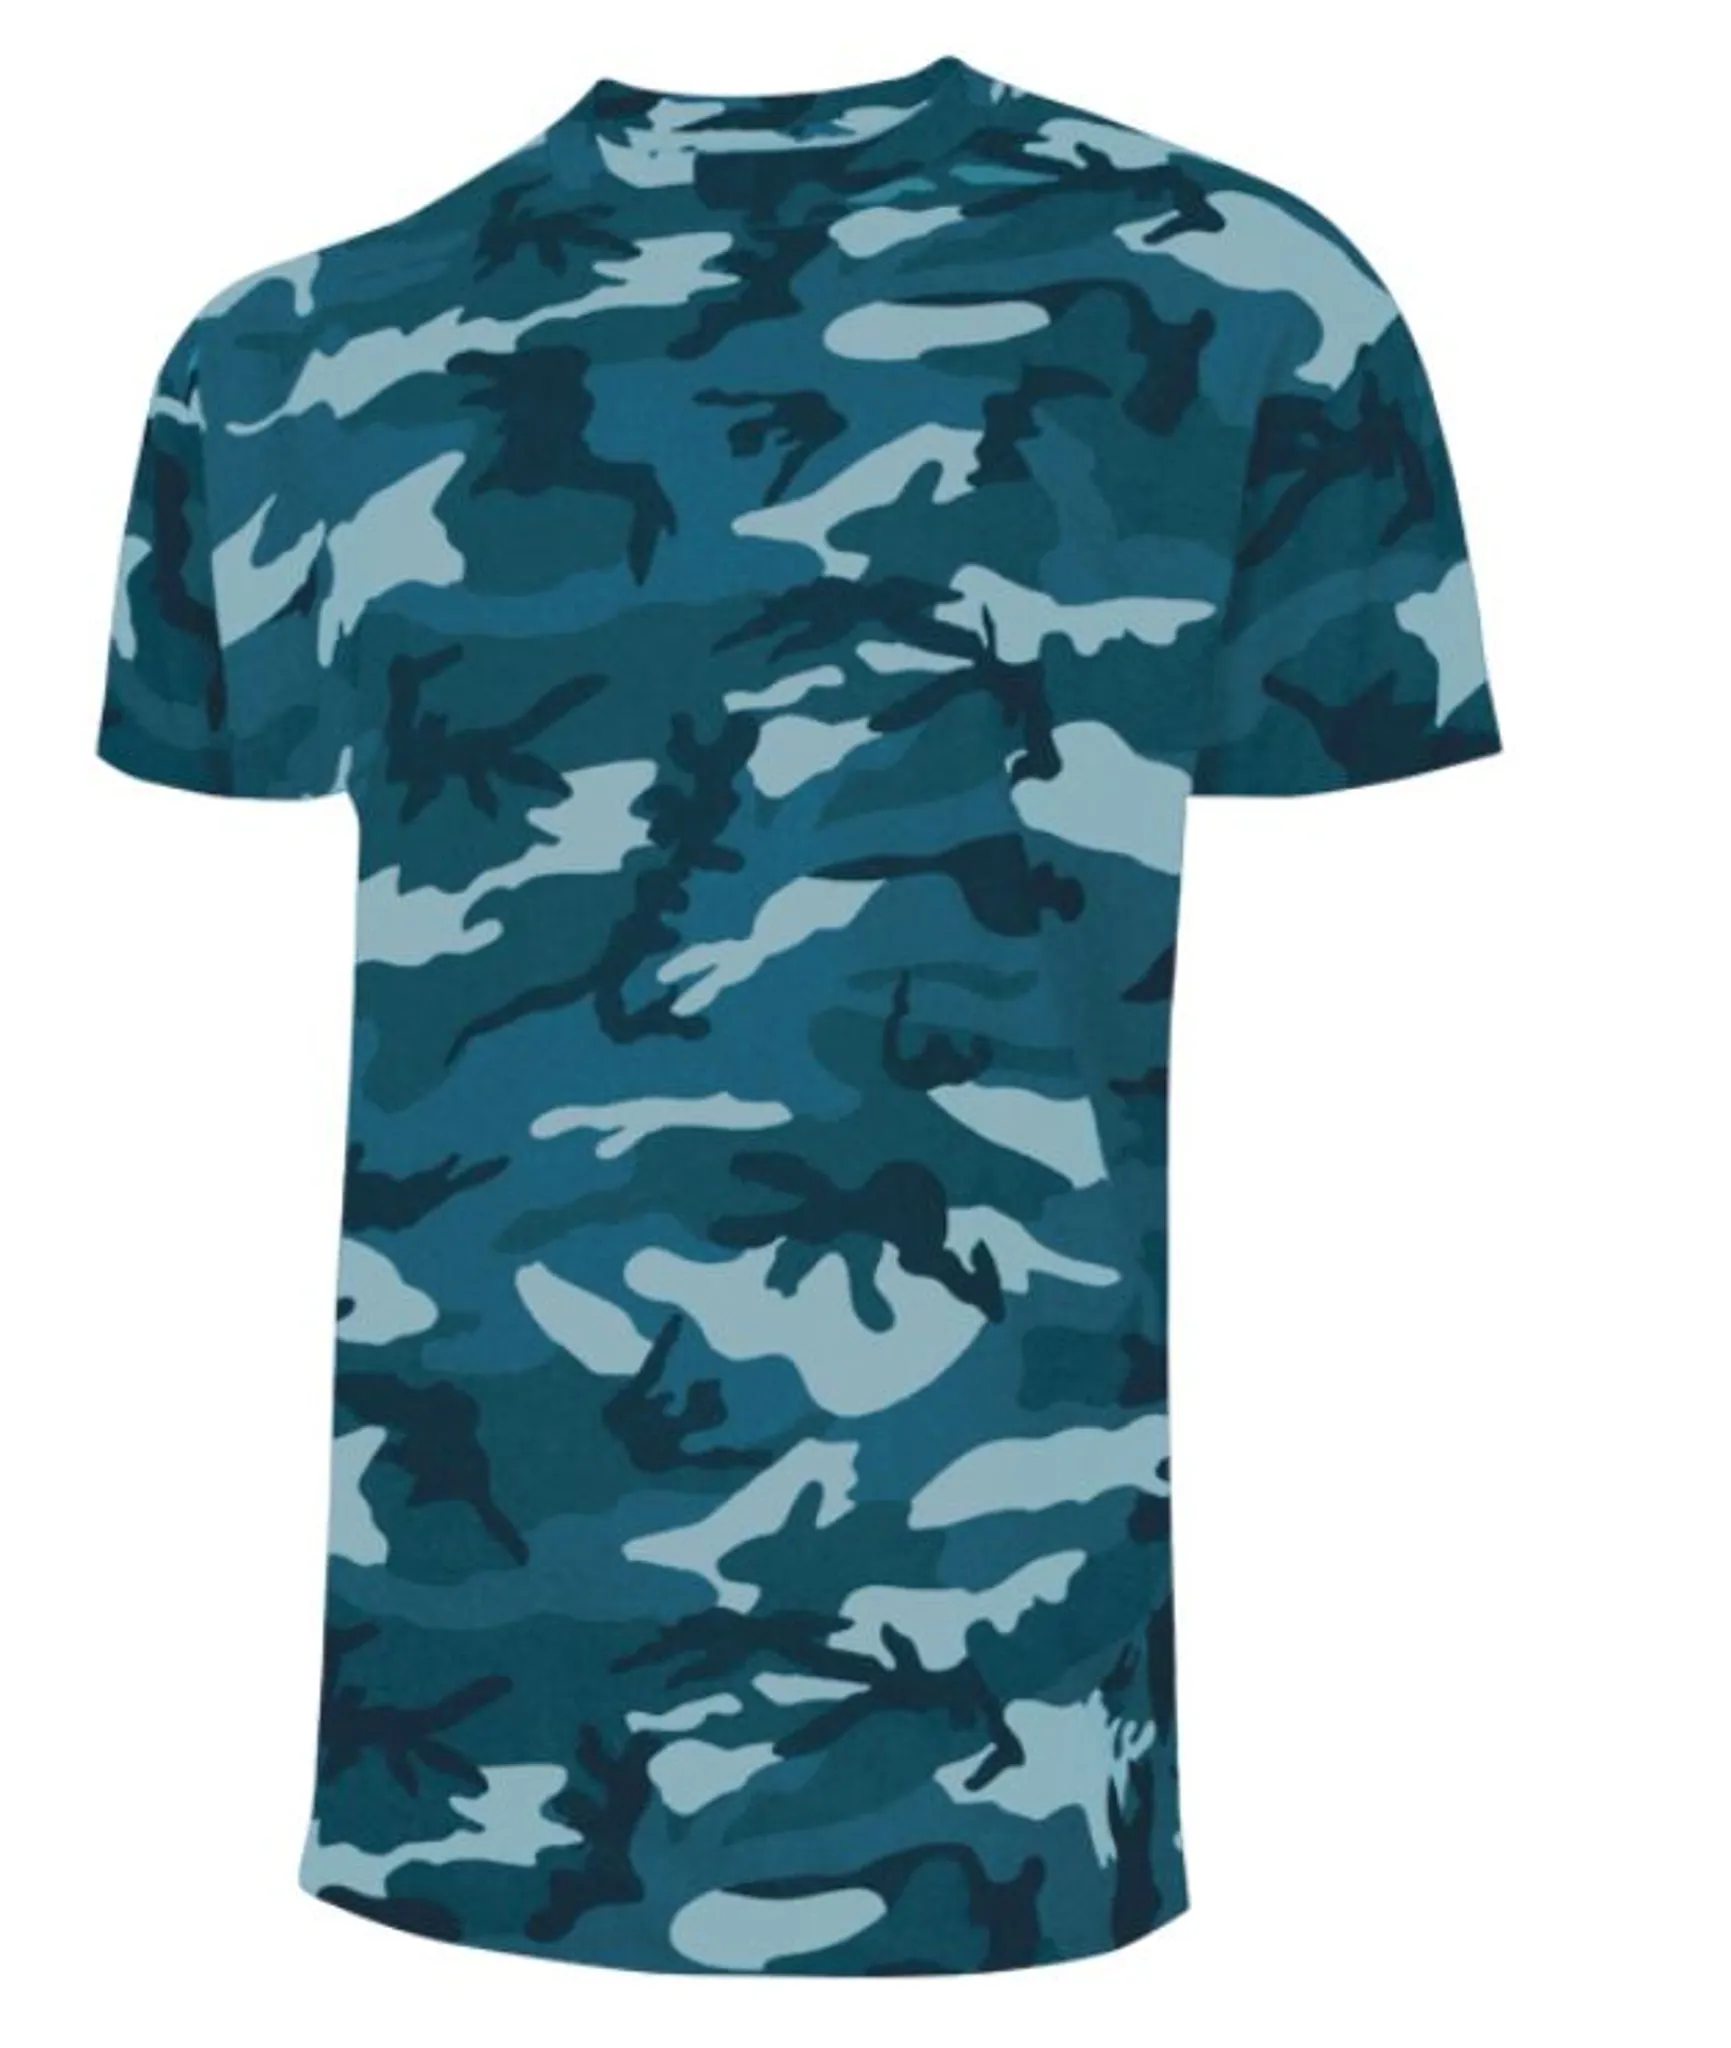 Blau (TS-Moro-Blue) Arbeitsbekleidung Kurzarmshirt Gr. 100% T-Shirt Baumwolle Unterhemd XXL Camouflage Arbeit